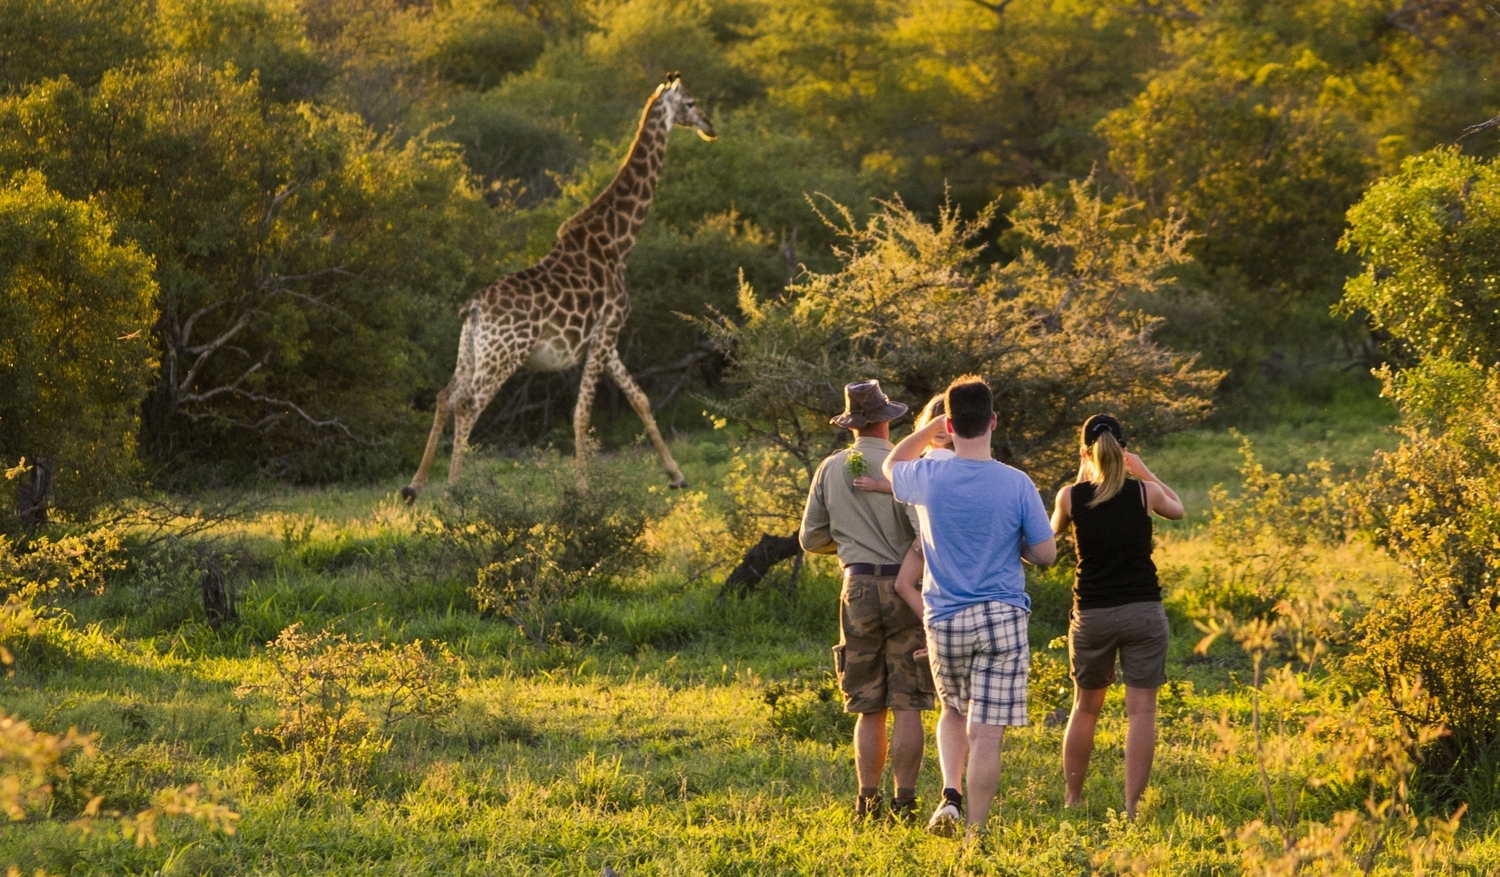 safari sud africa costo